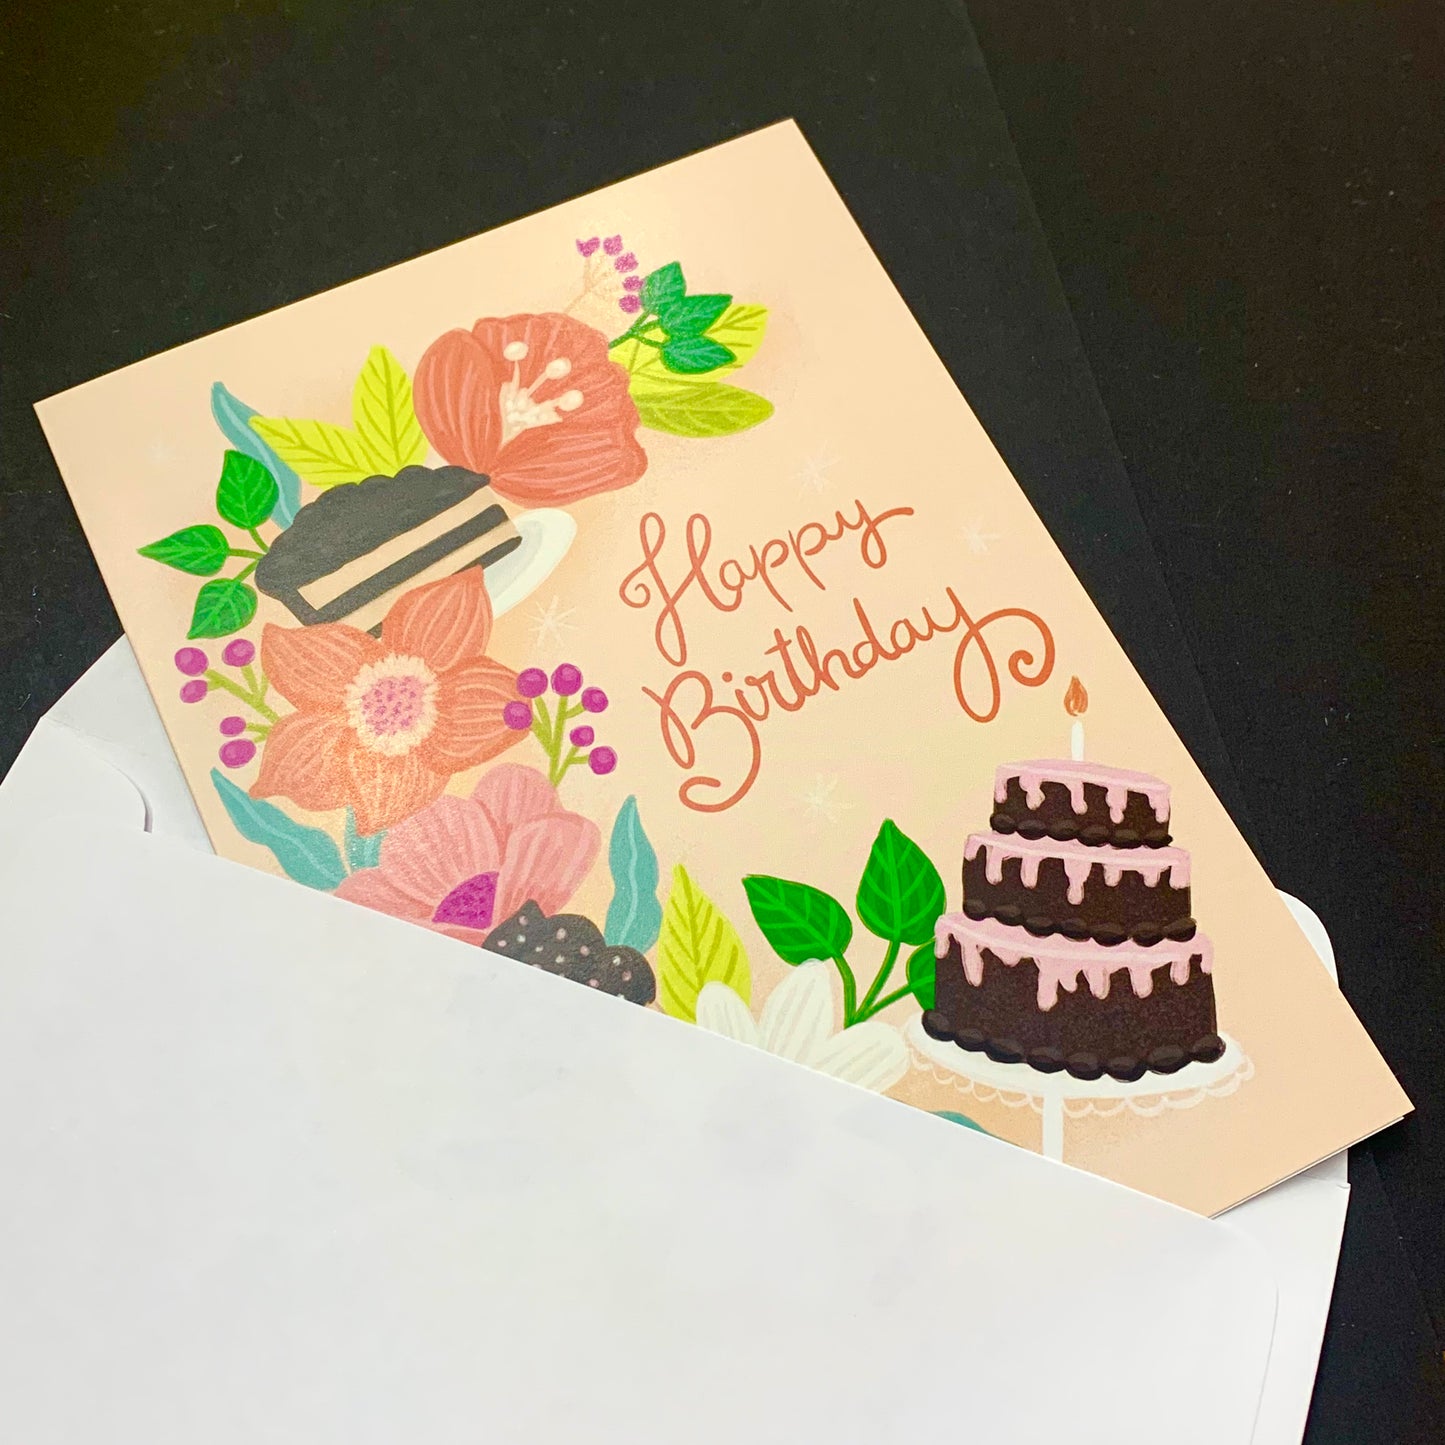 NUOVO - "HAPPY BIRTHDAY" FLOWERS & CAKE GREETING CARD